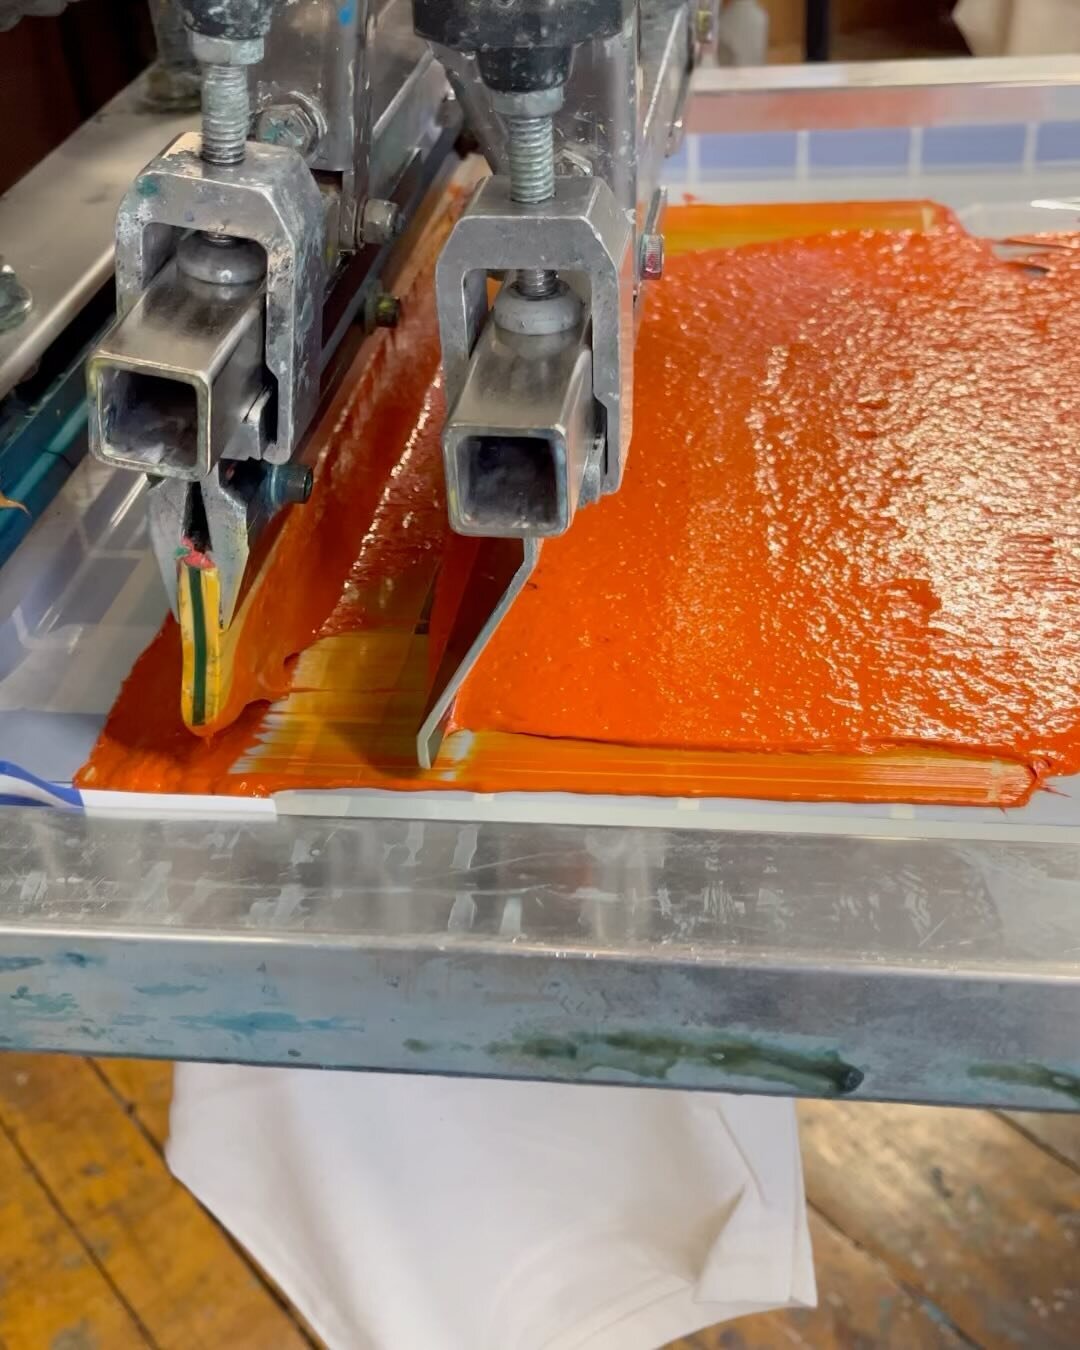 Tasty orange ink going on shirts for @flackfamilyfarm 

#screenprinting #orange #cultureworks #amalgamated #pinestreet #acw #ink #flackfamilyfarm #localbusiness #burlington #vermont